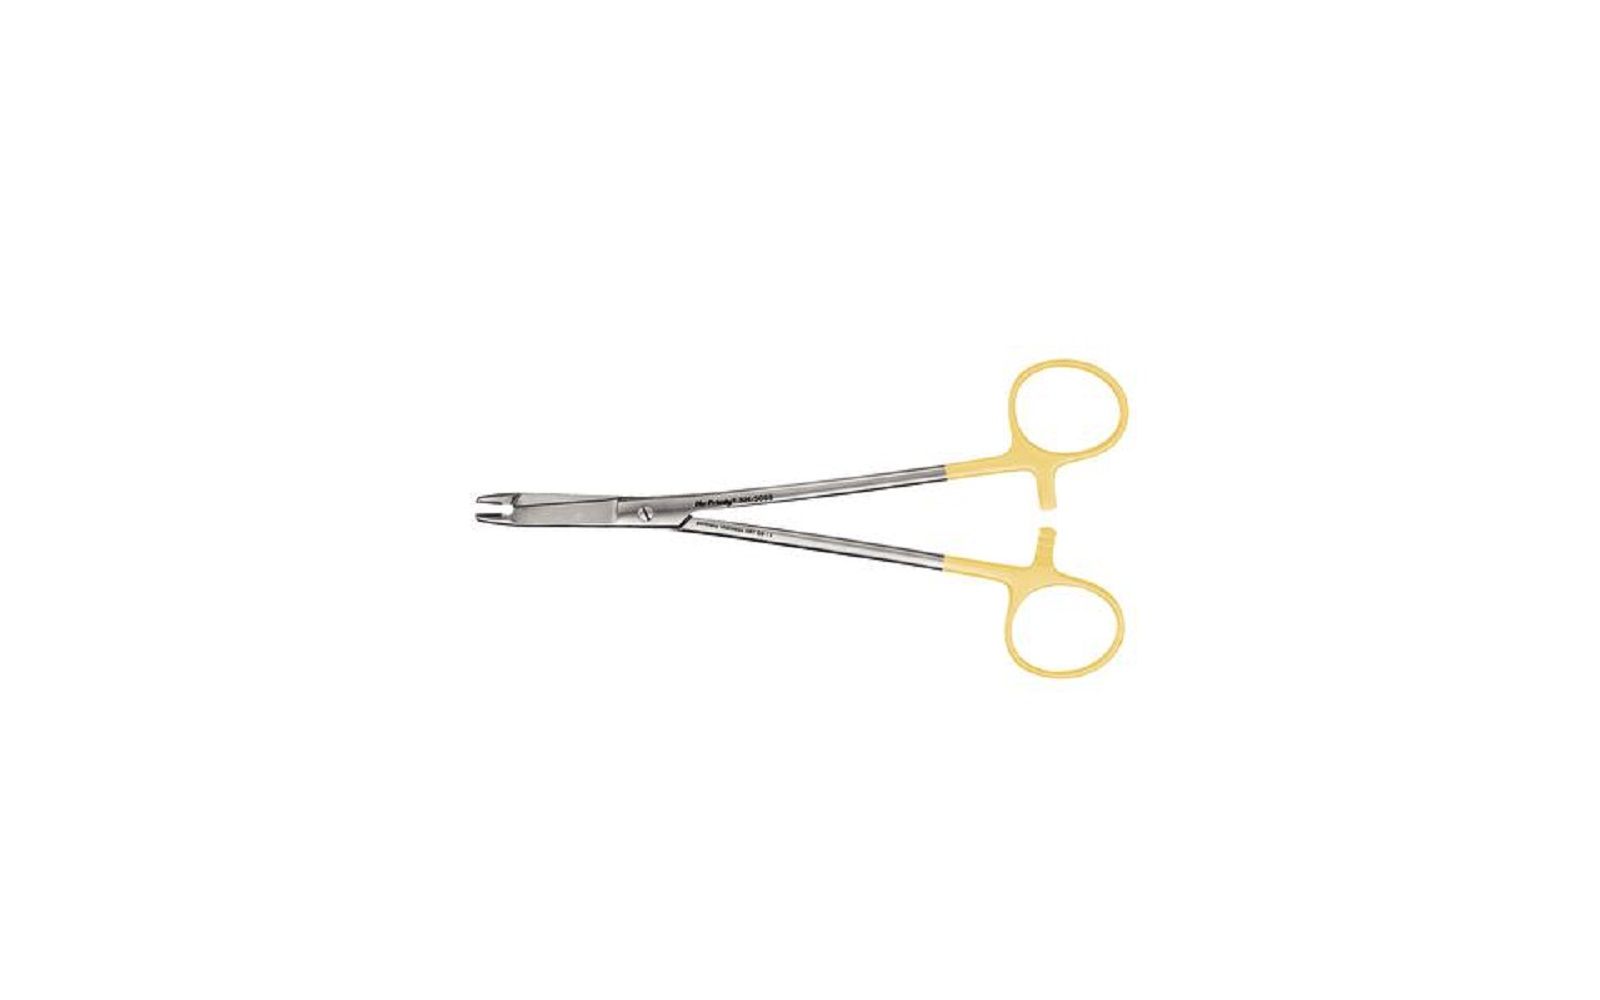 Needle holders – olsen-hegar, serrated jaws, 6-1/2"